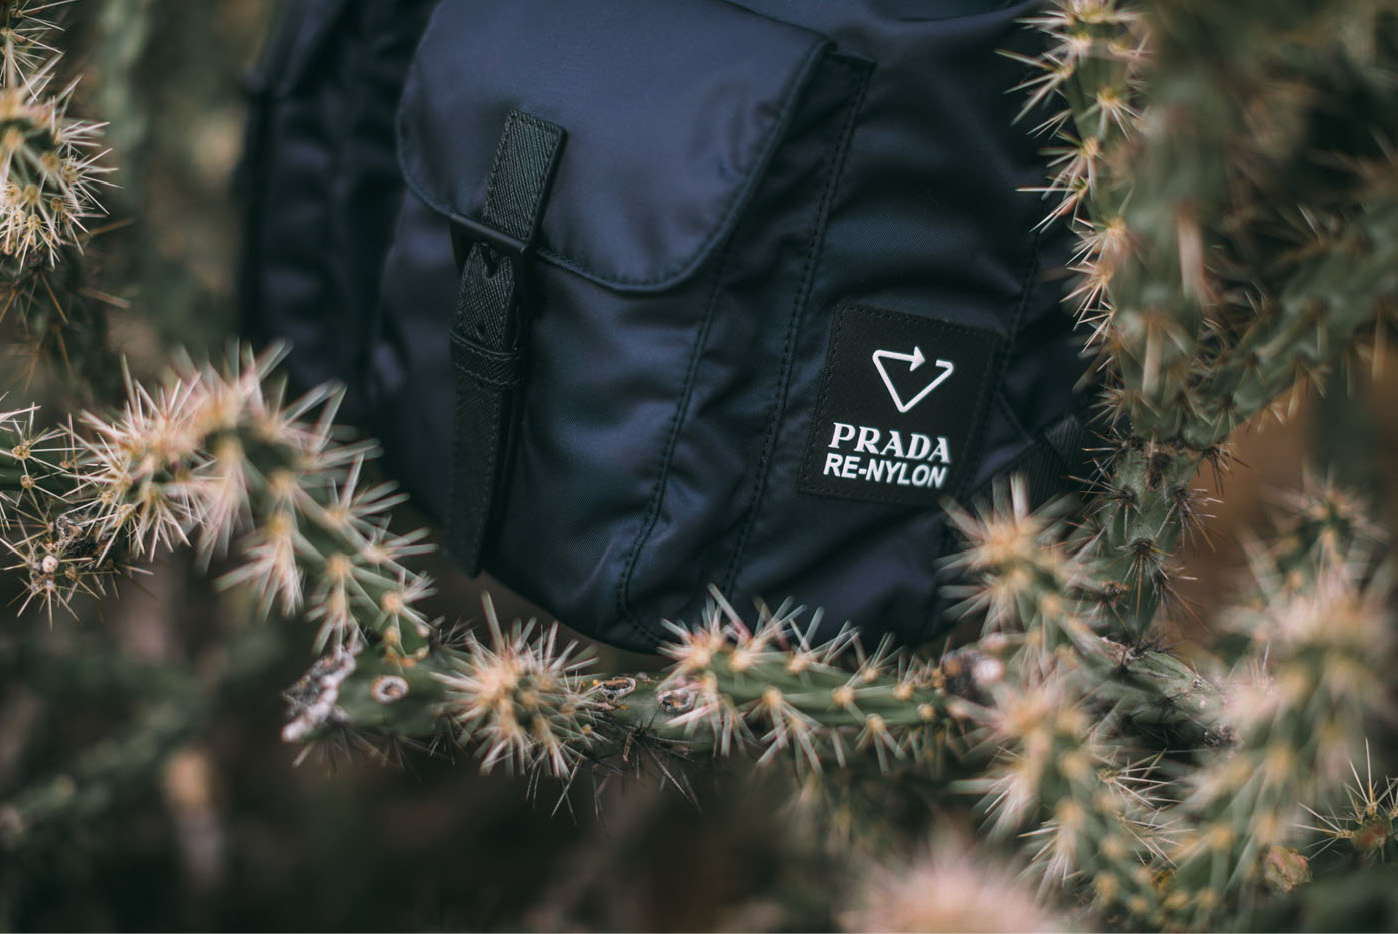 Prada Has Recreated Their Signature Nylon Bag Made From Plastic